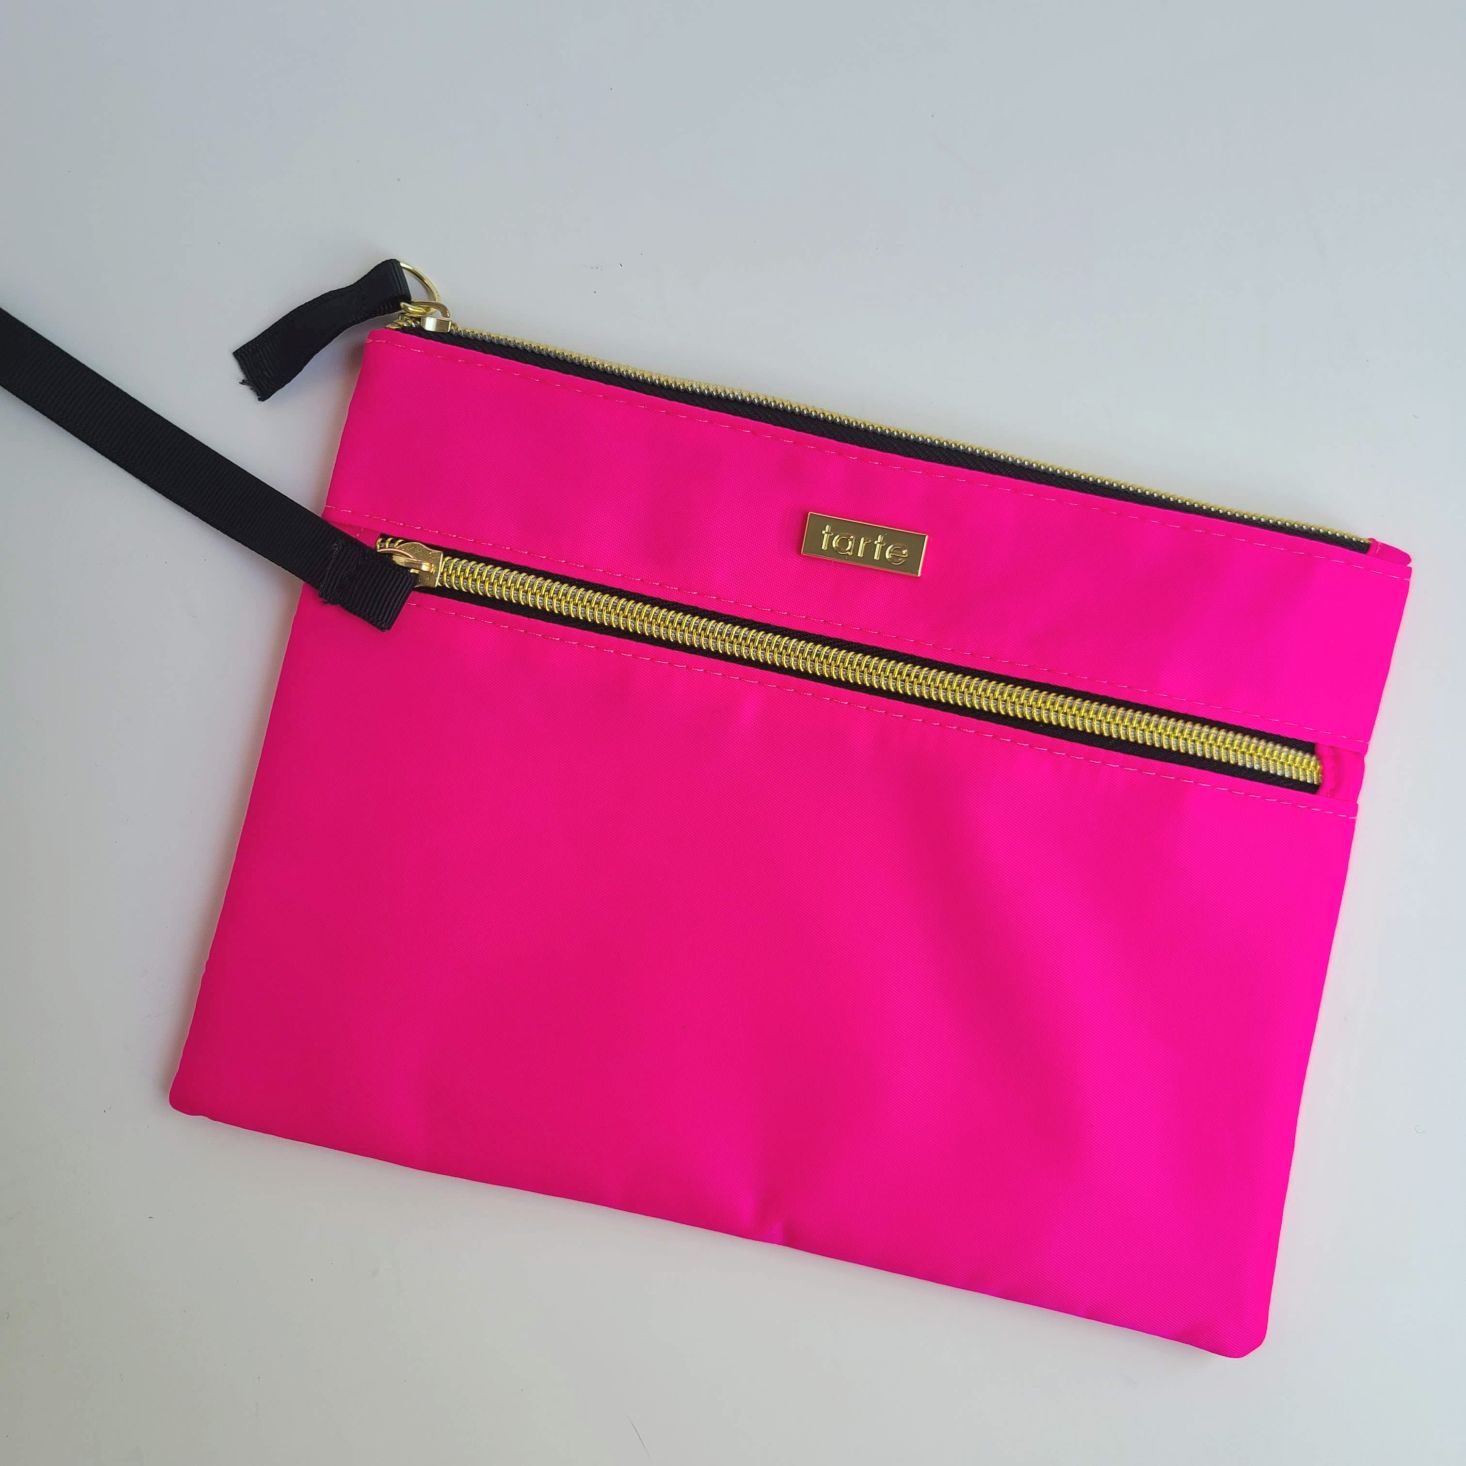 Tarte Create Your Own Beauty Kit June 2020 zipper pouch front